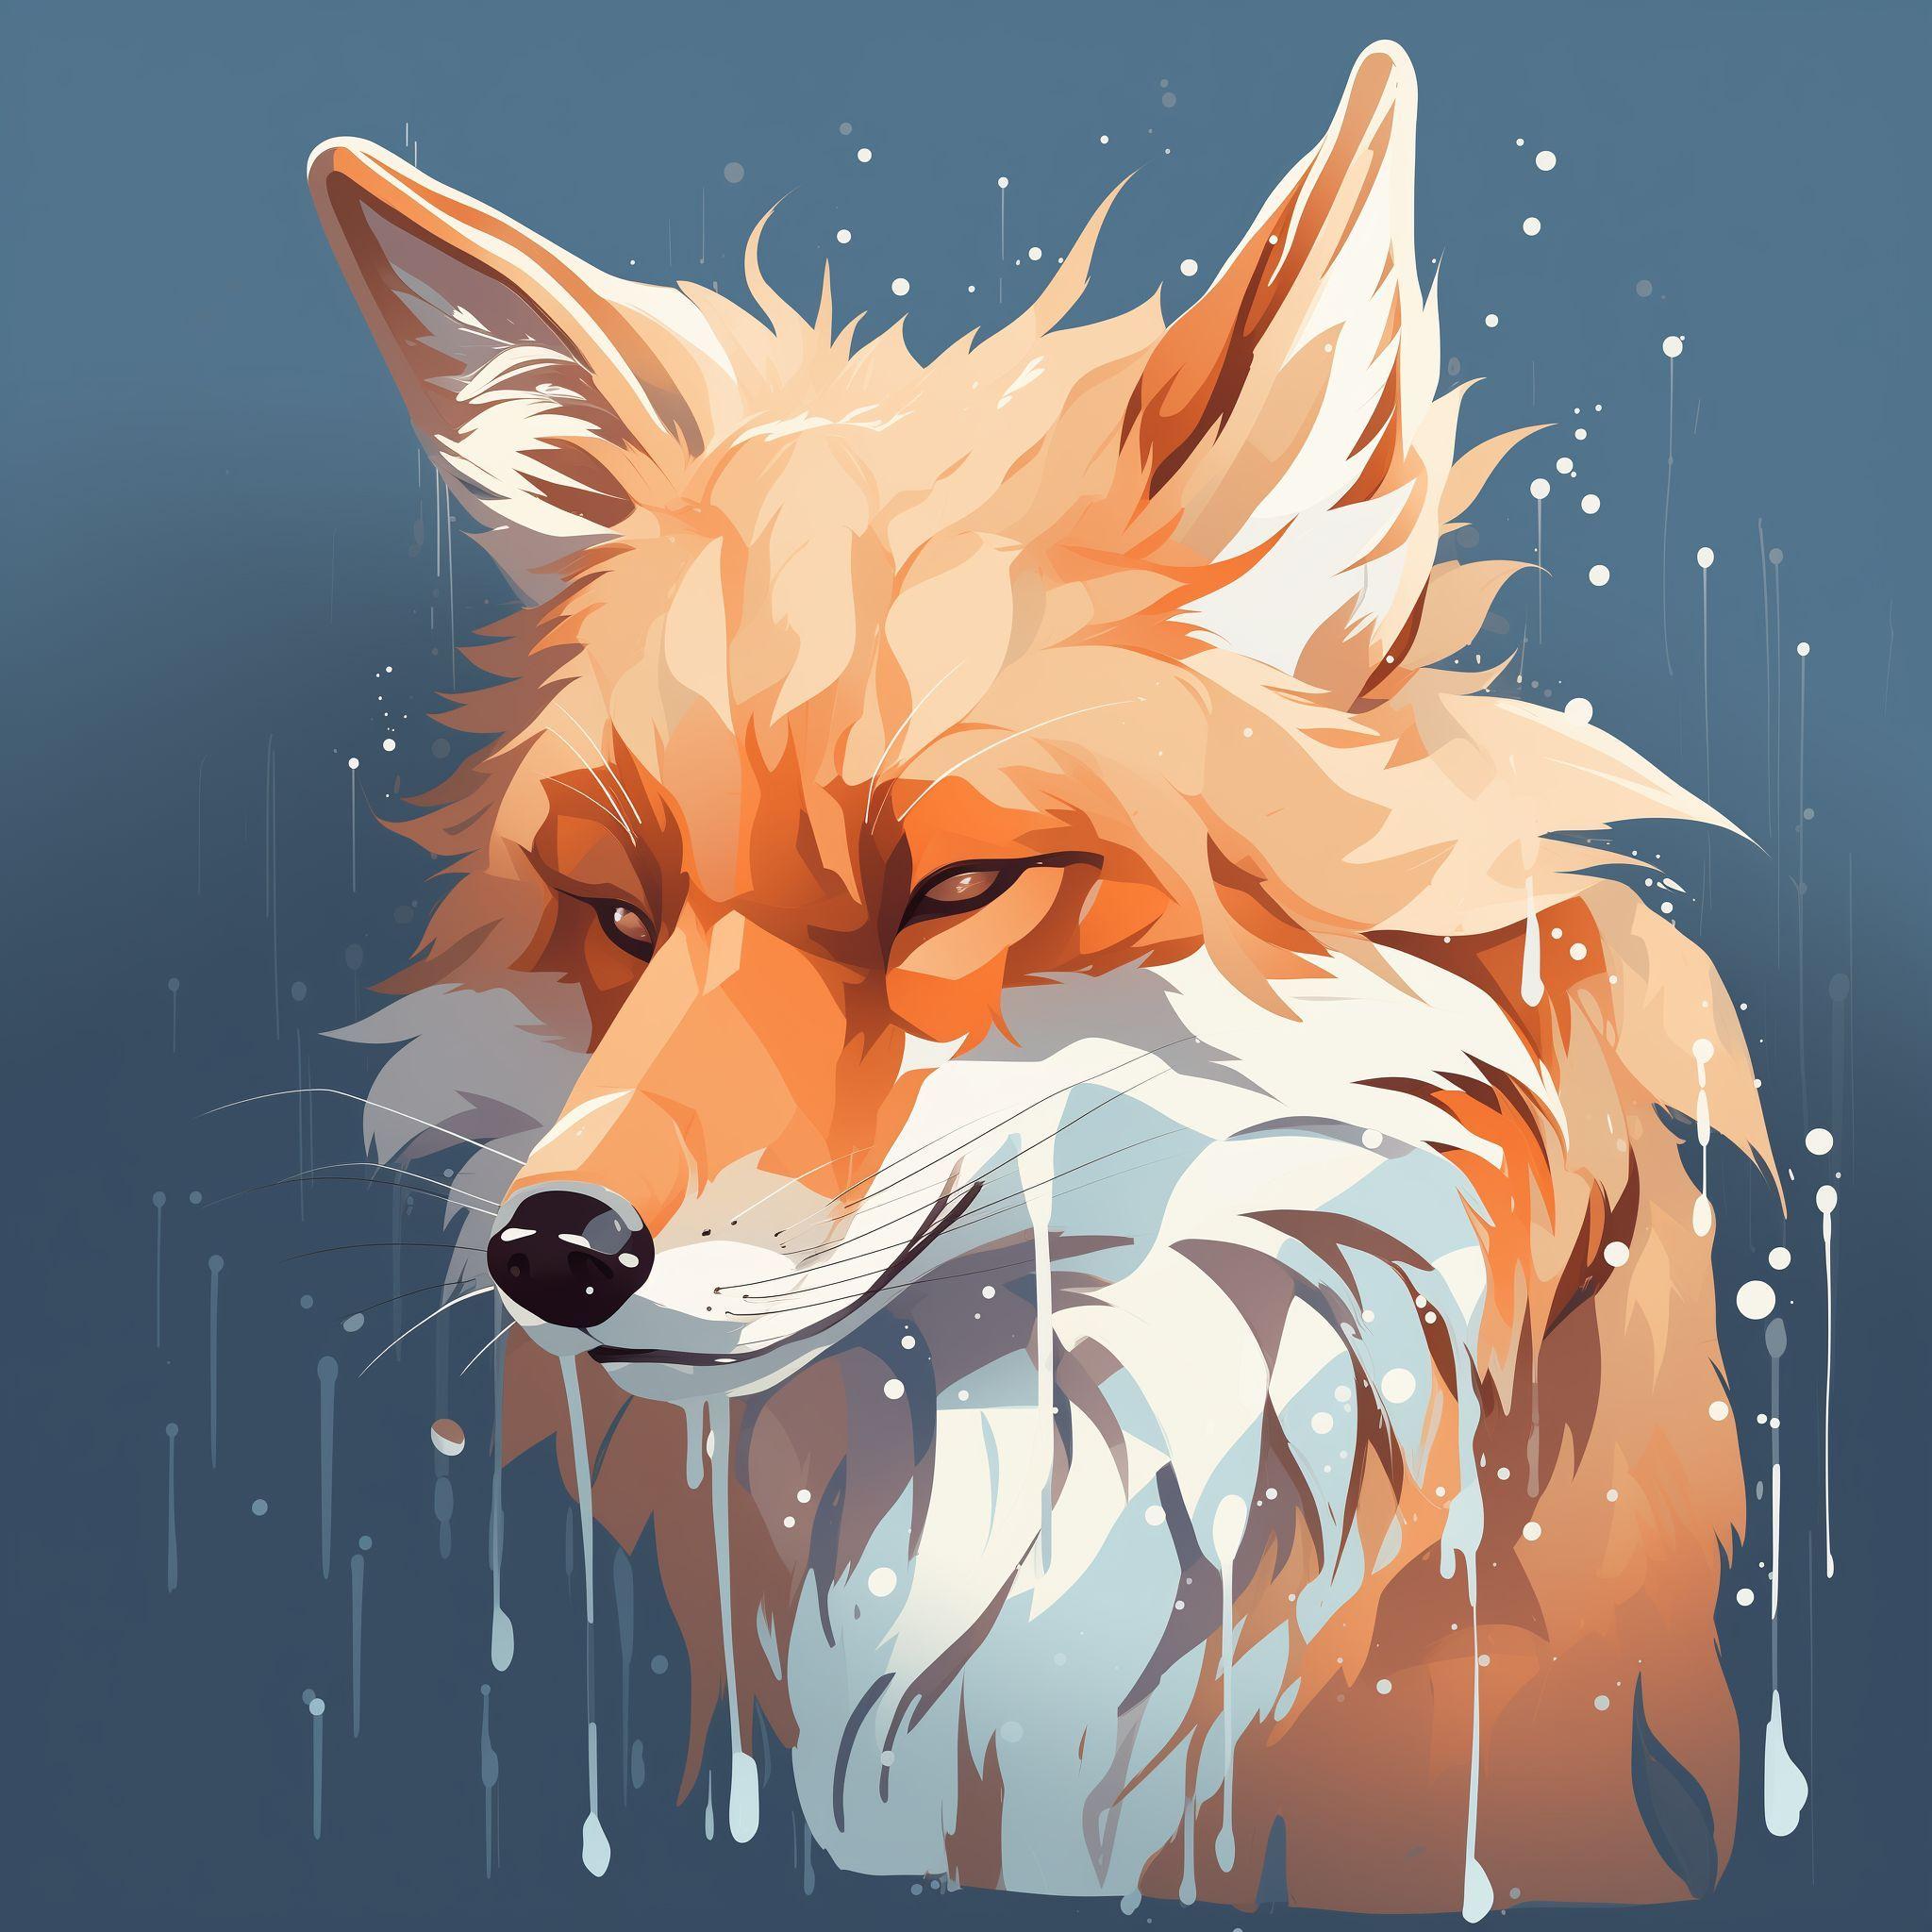 Player foxtears avatar